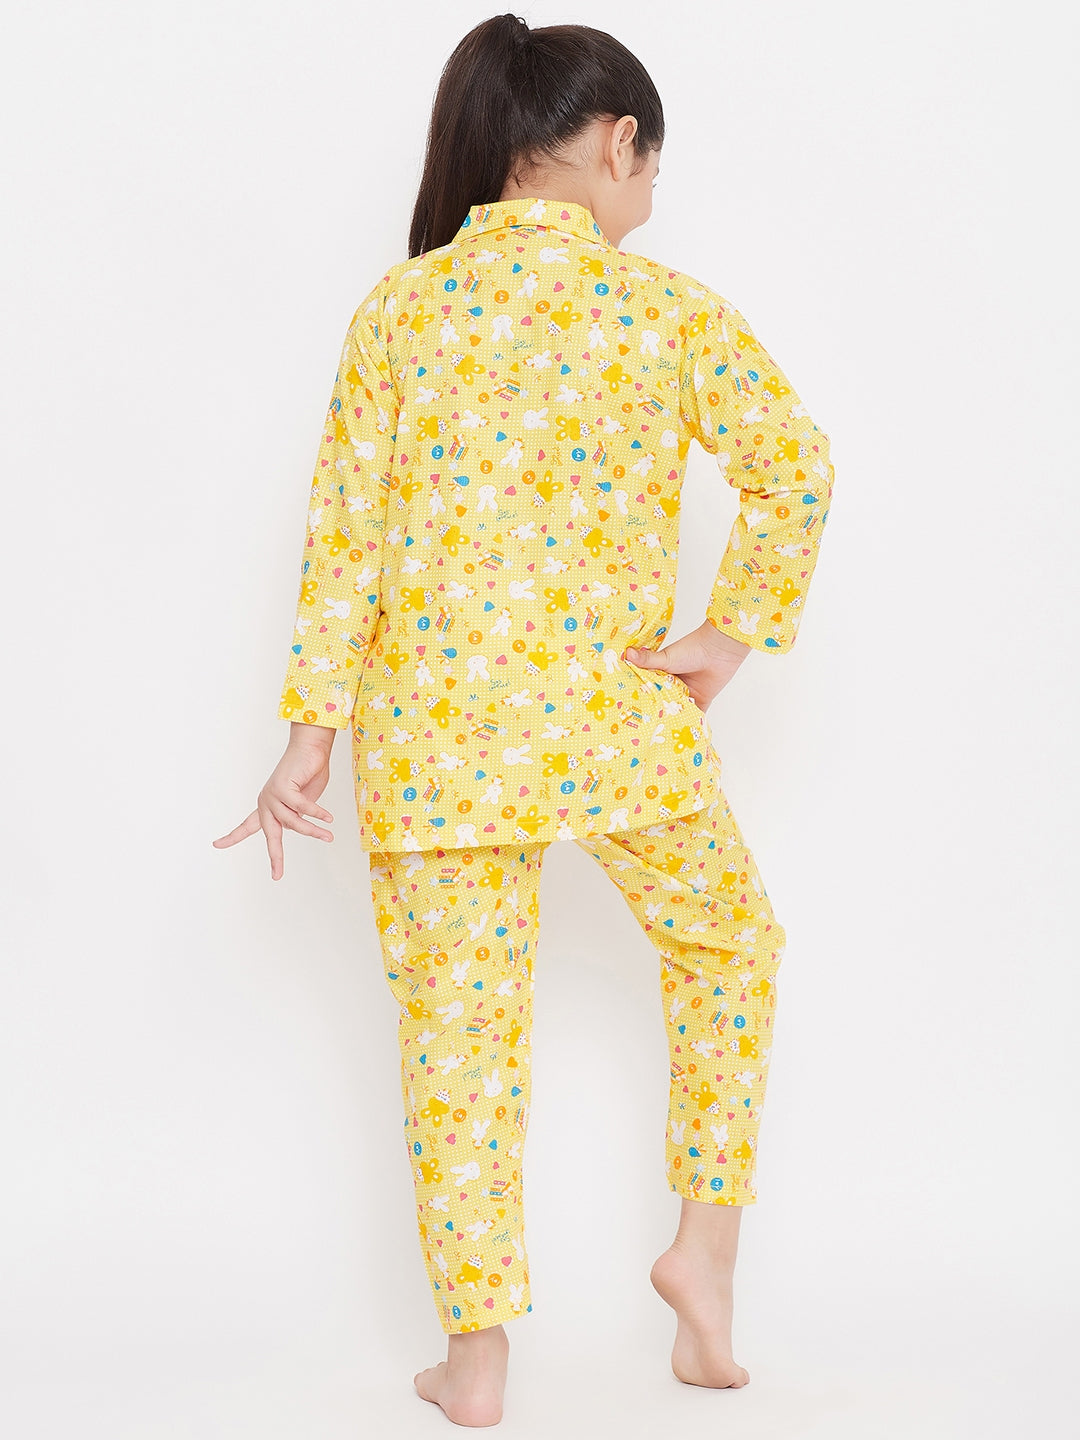 Kydzi Peach & Yellow Printed Rayon Nightsuit (Pack of 2)